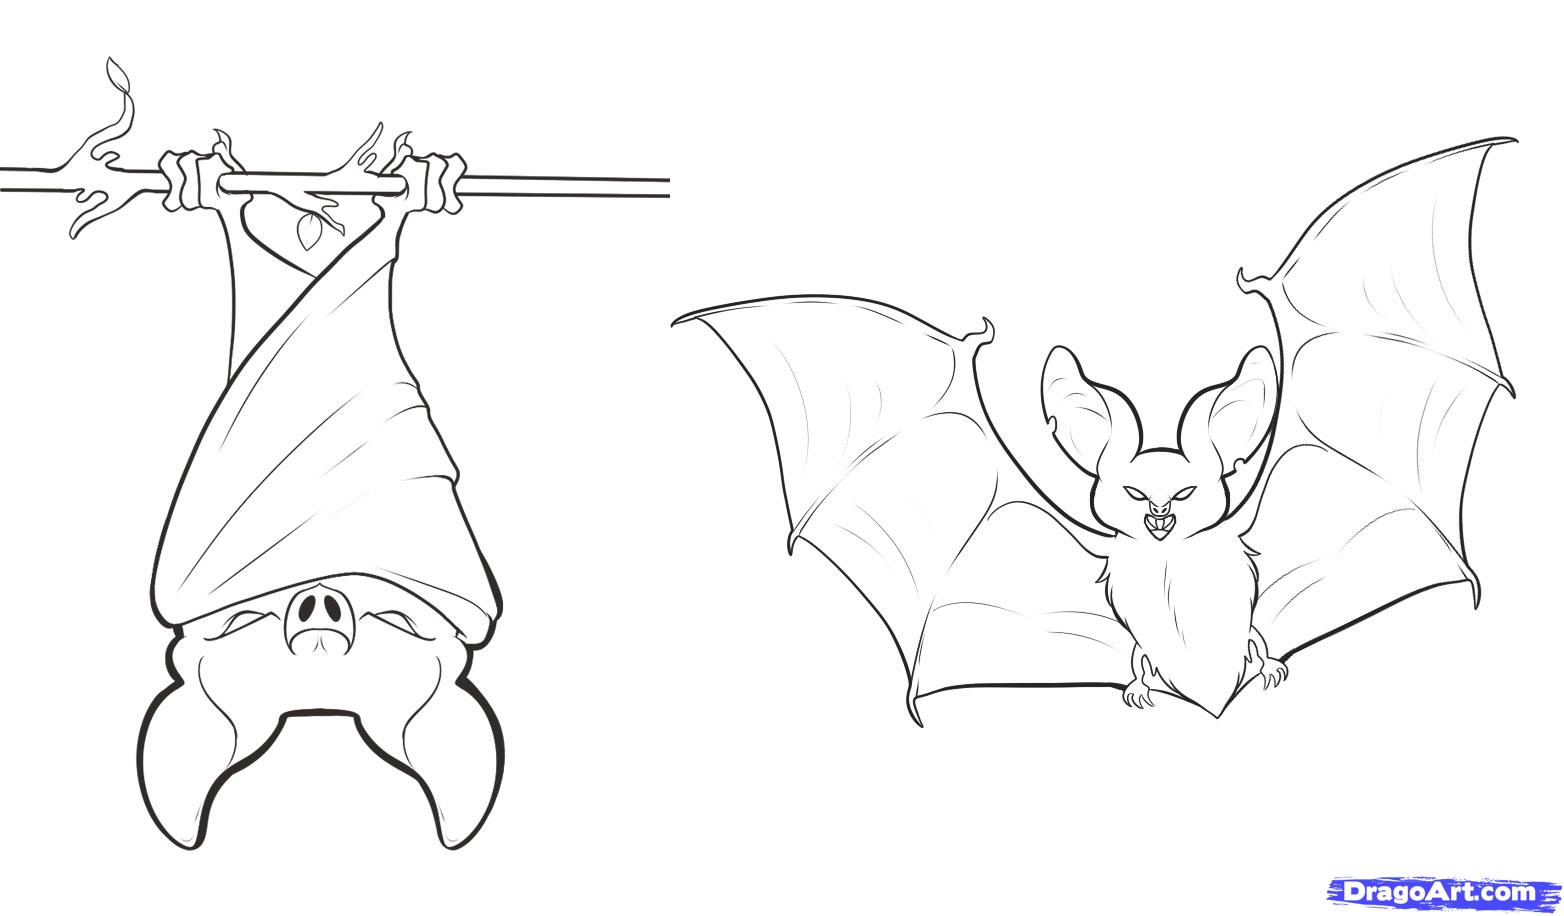 Free Drawings Of Fruit Bats, Download Free Drawings Of